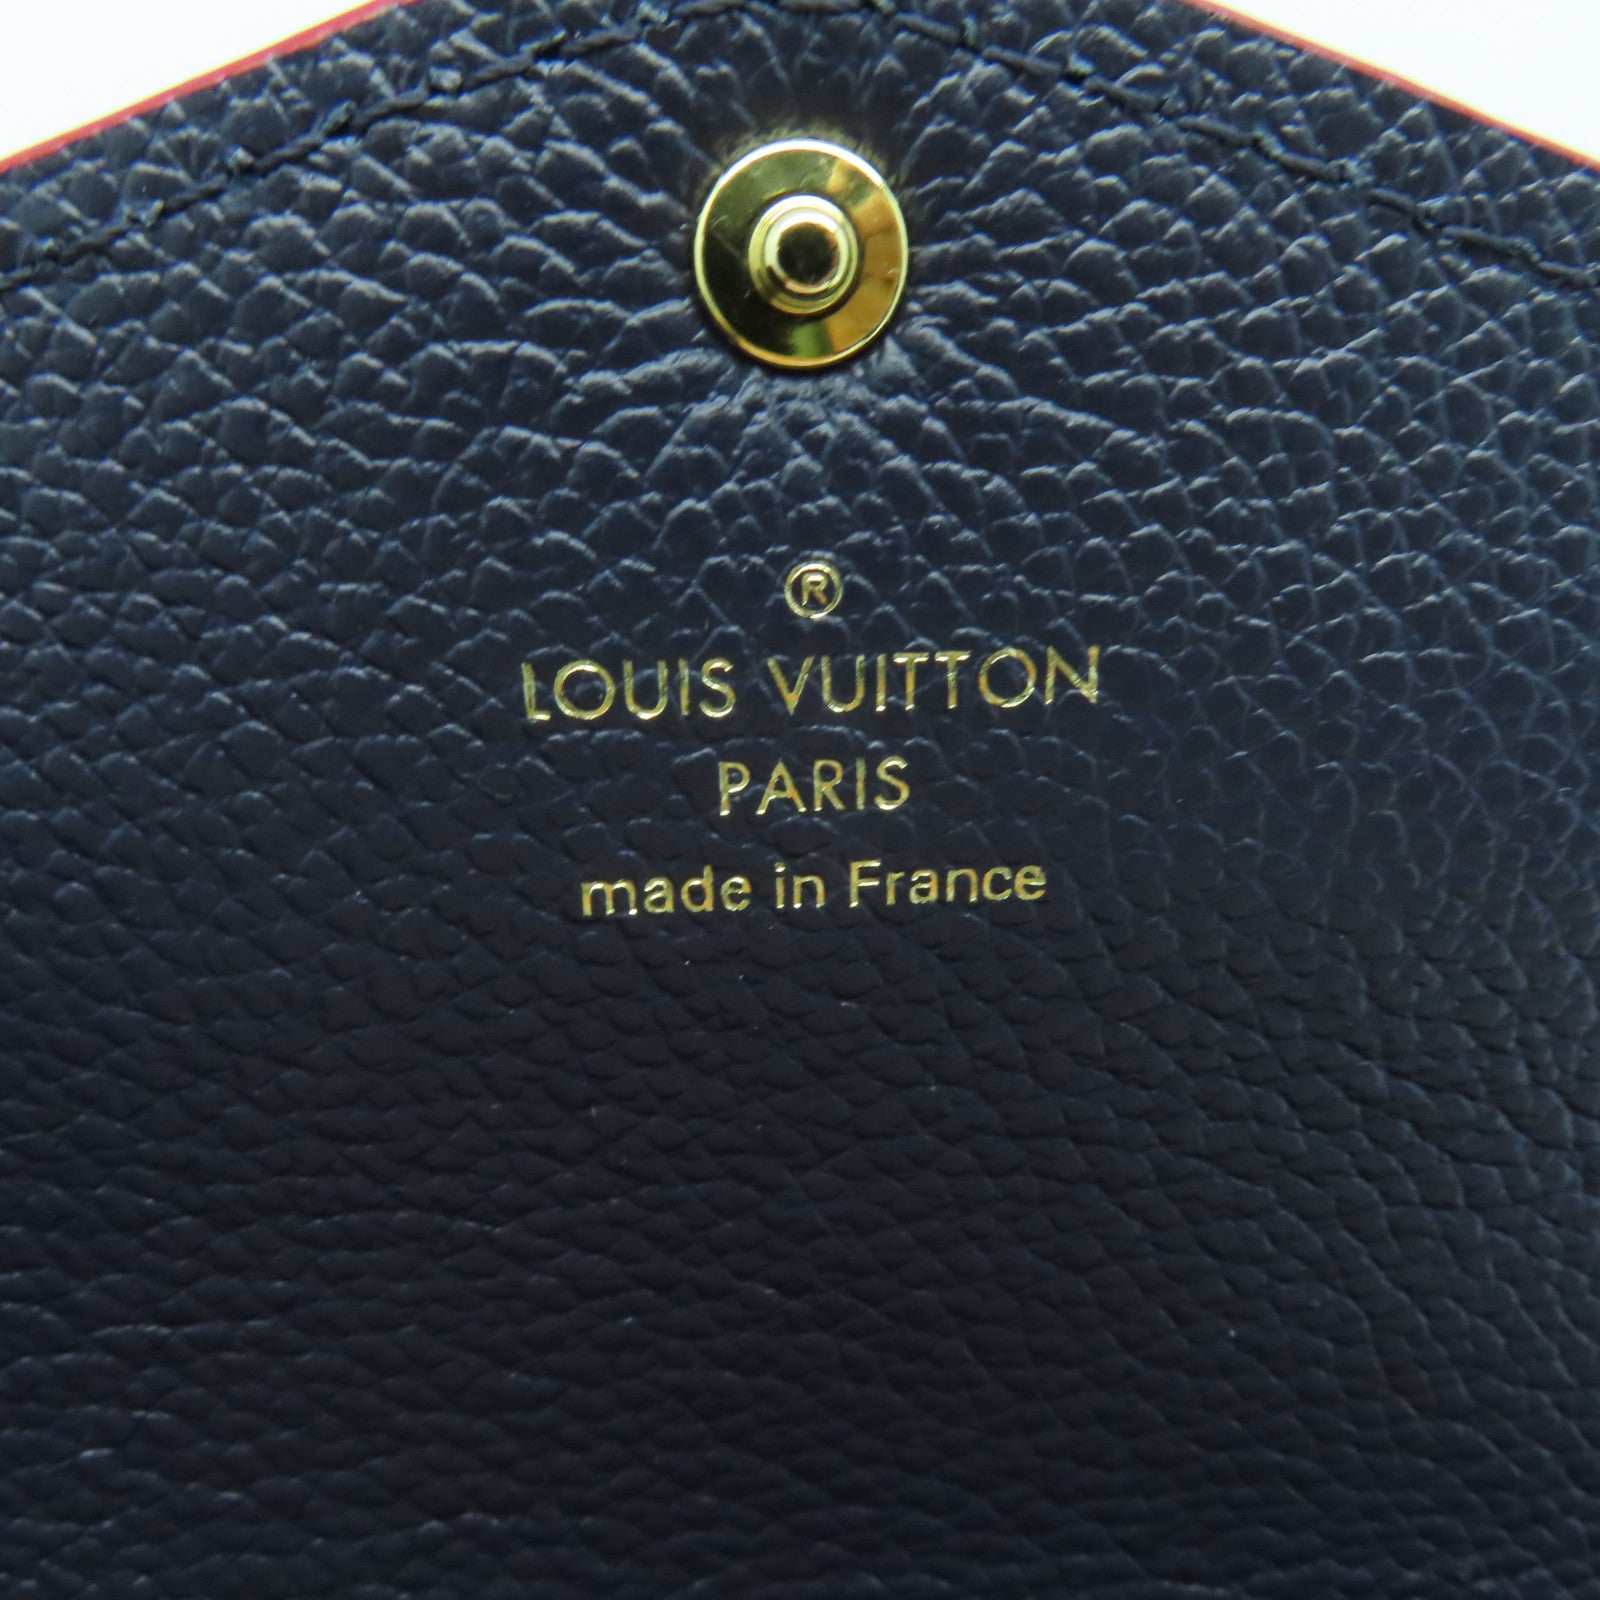 LOUIS VUITTON Monogram Empreinte Sarah gold buckle long wallet dark blue